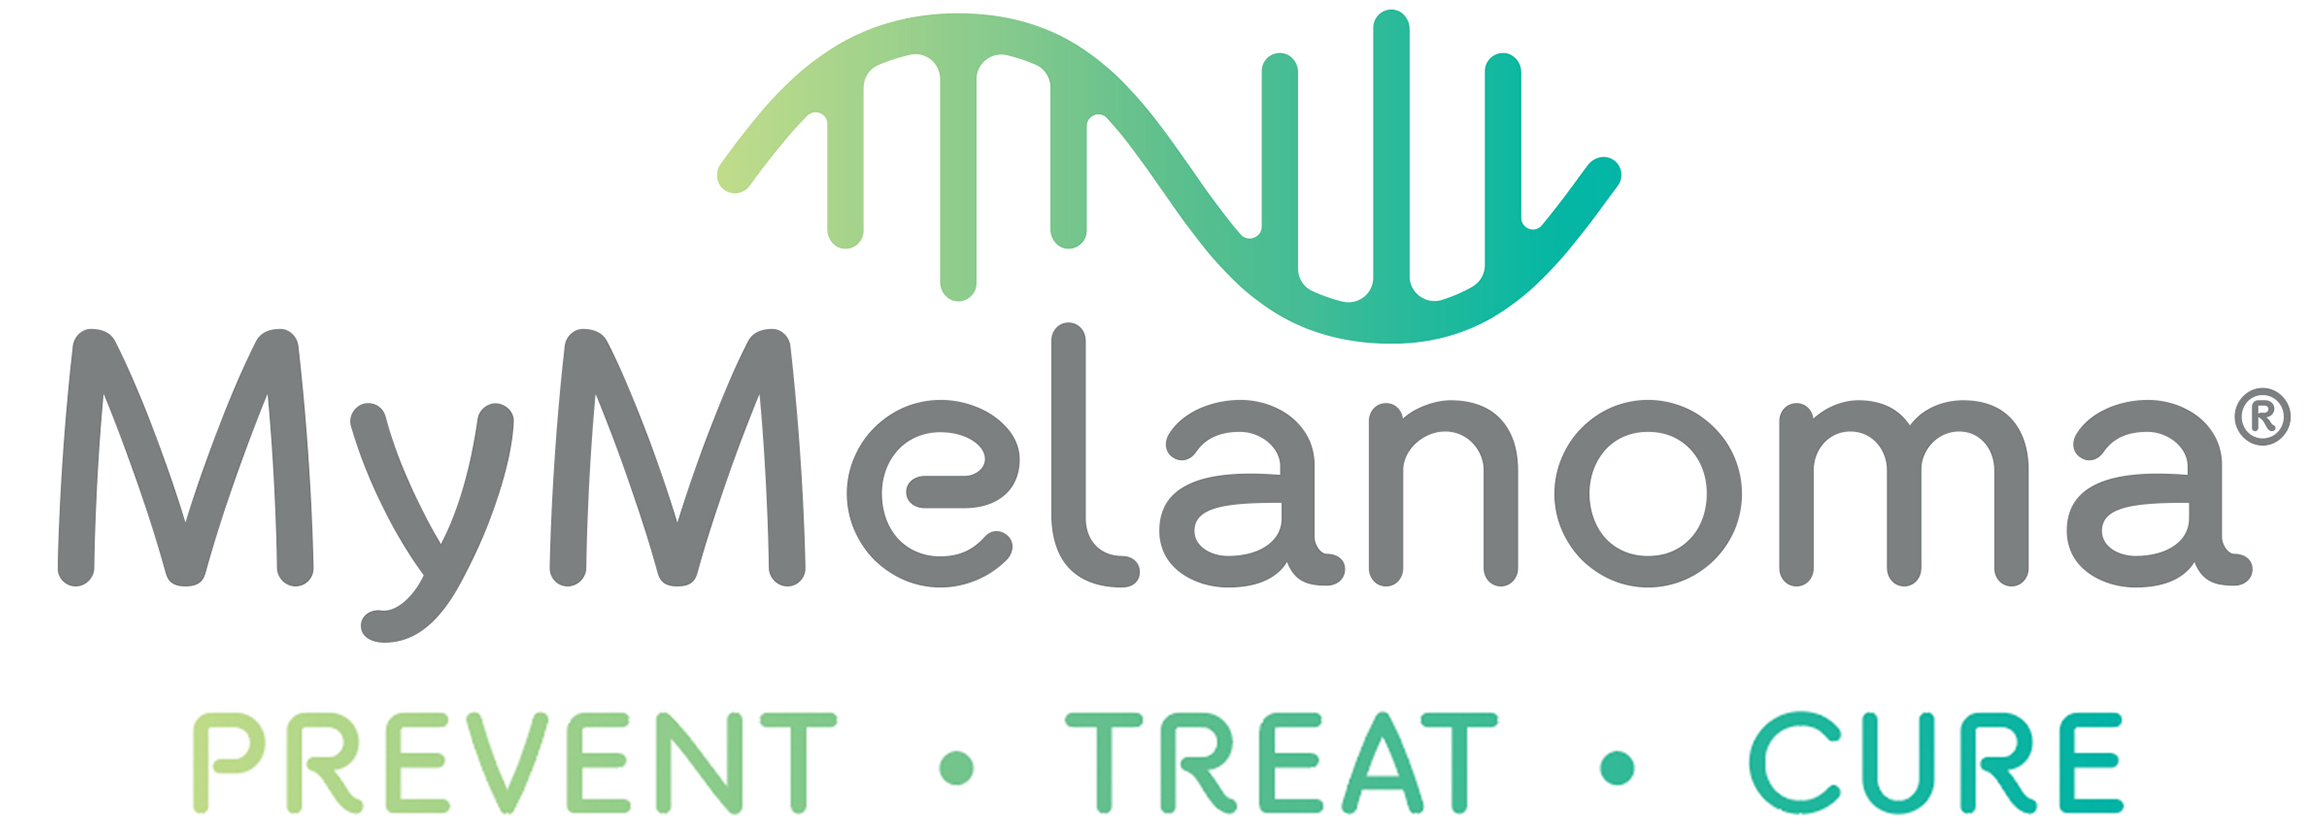 MyMelanoma Logo